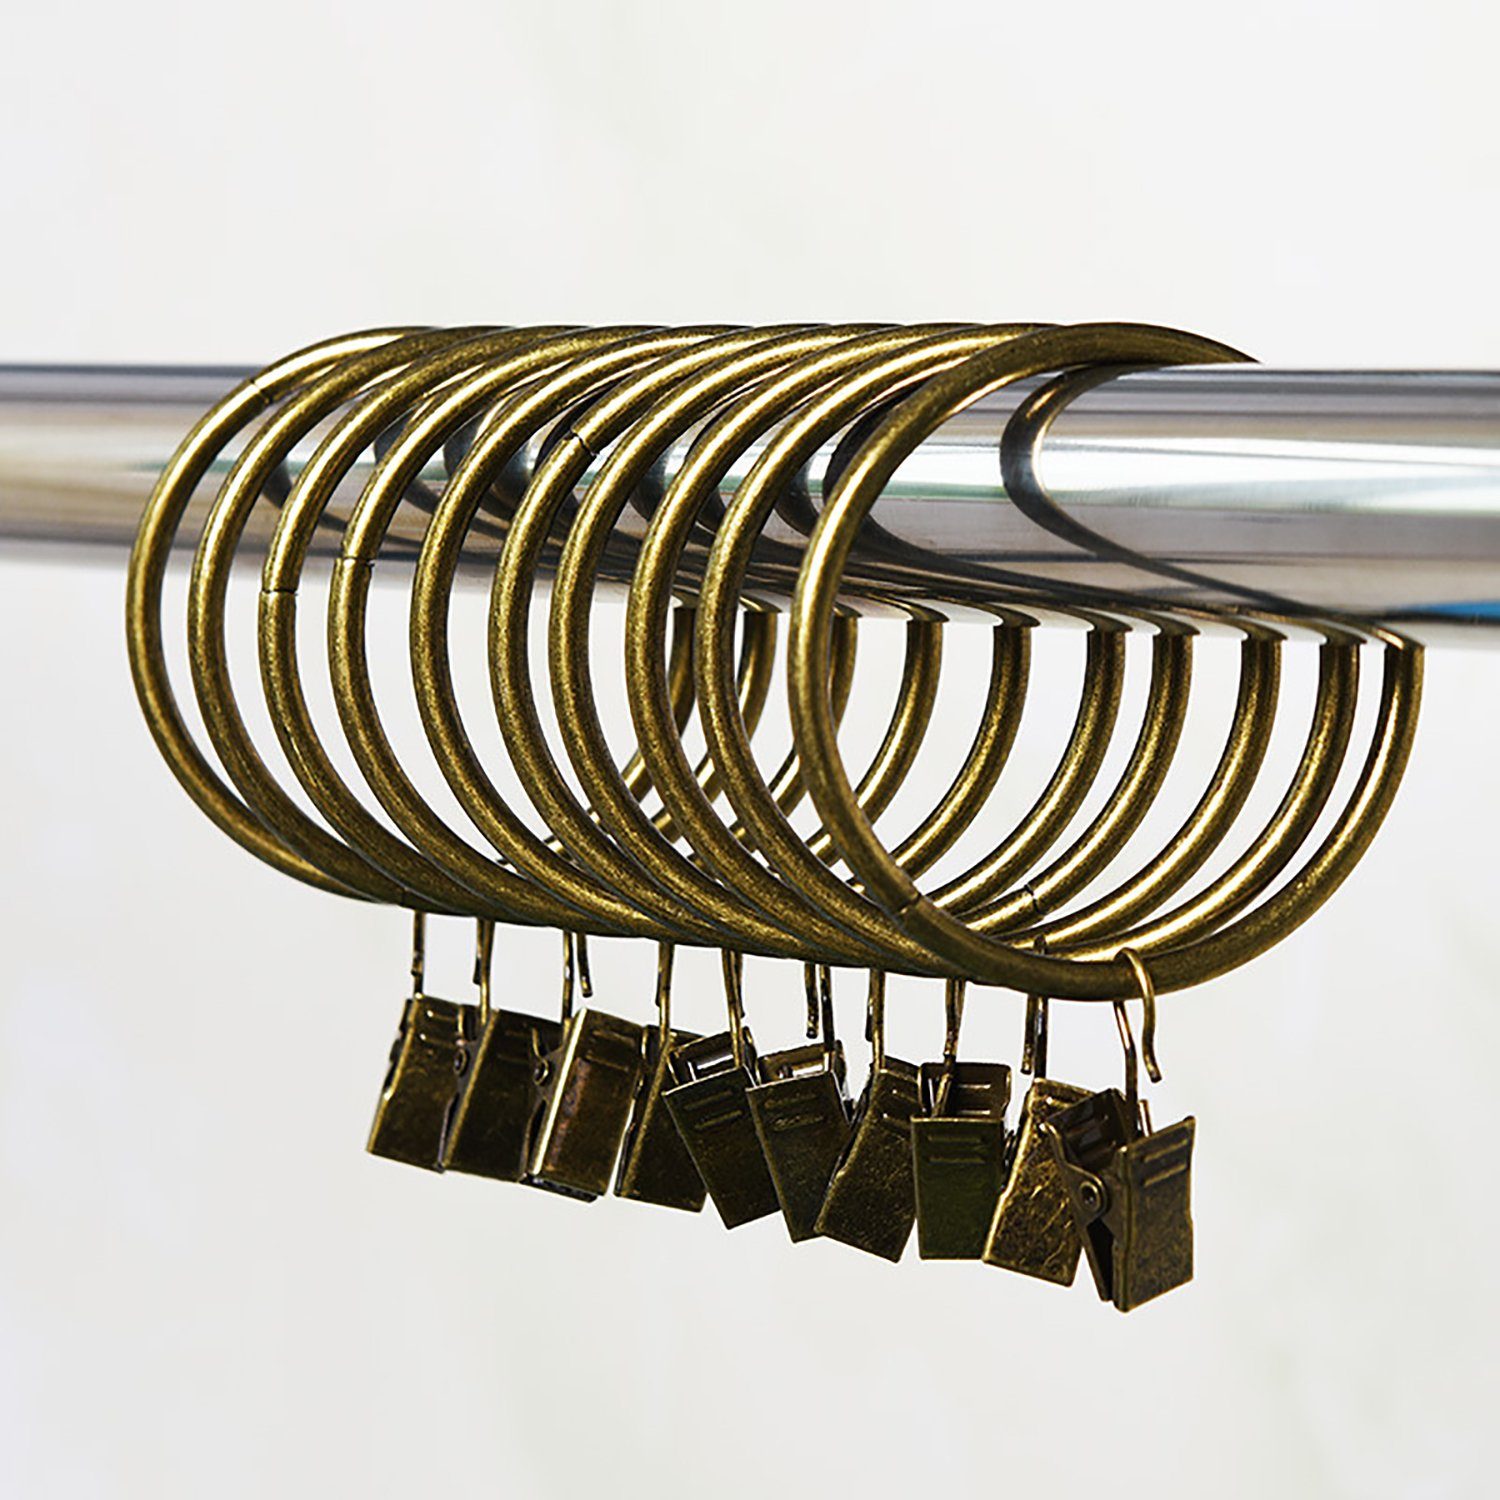 Vorhang Klemmhalter Gardinenstangen Bronze mit (40-St), Haken Metall Ringe Clips, ZAXSD, Clips 40pcs 32mm für Gardinenringe Vorhang Vorhangringe mit